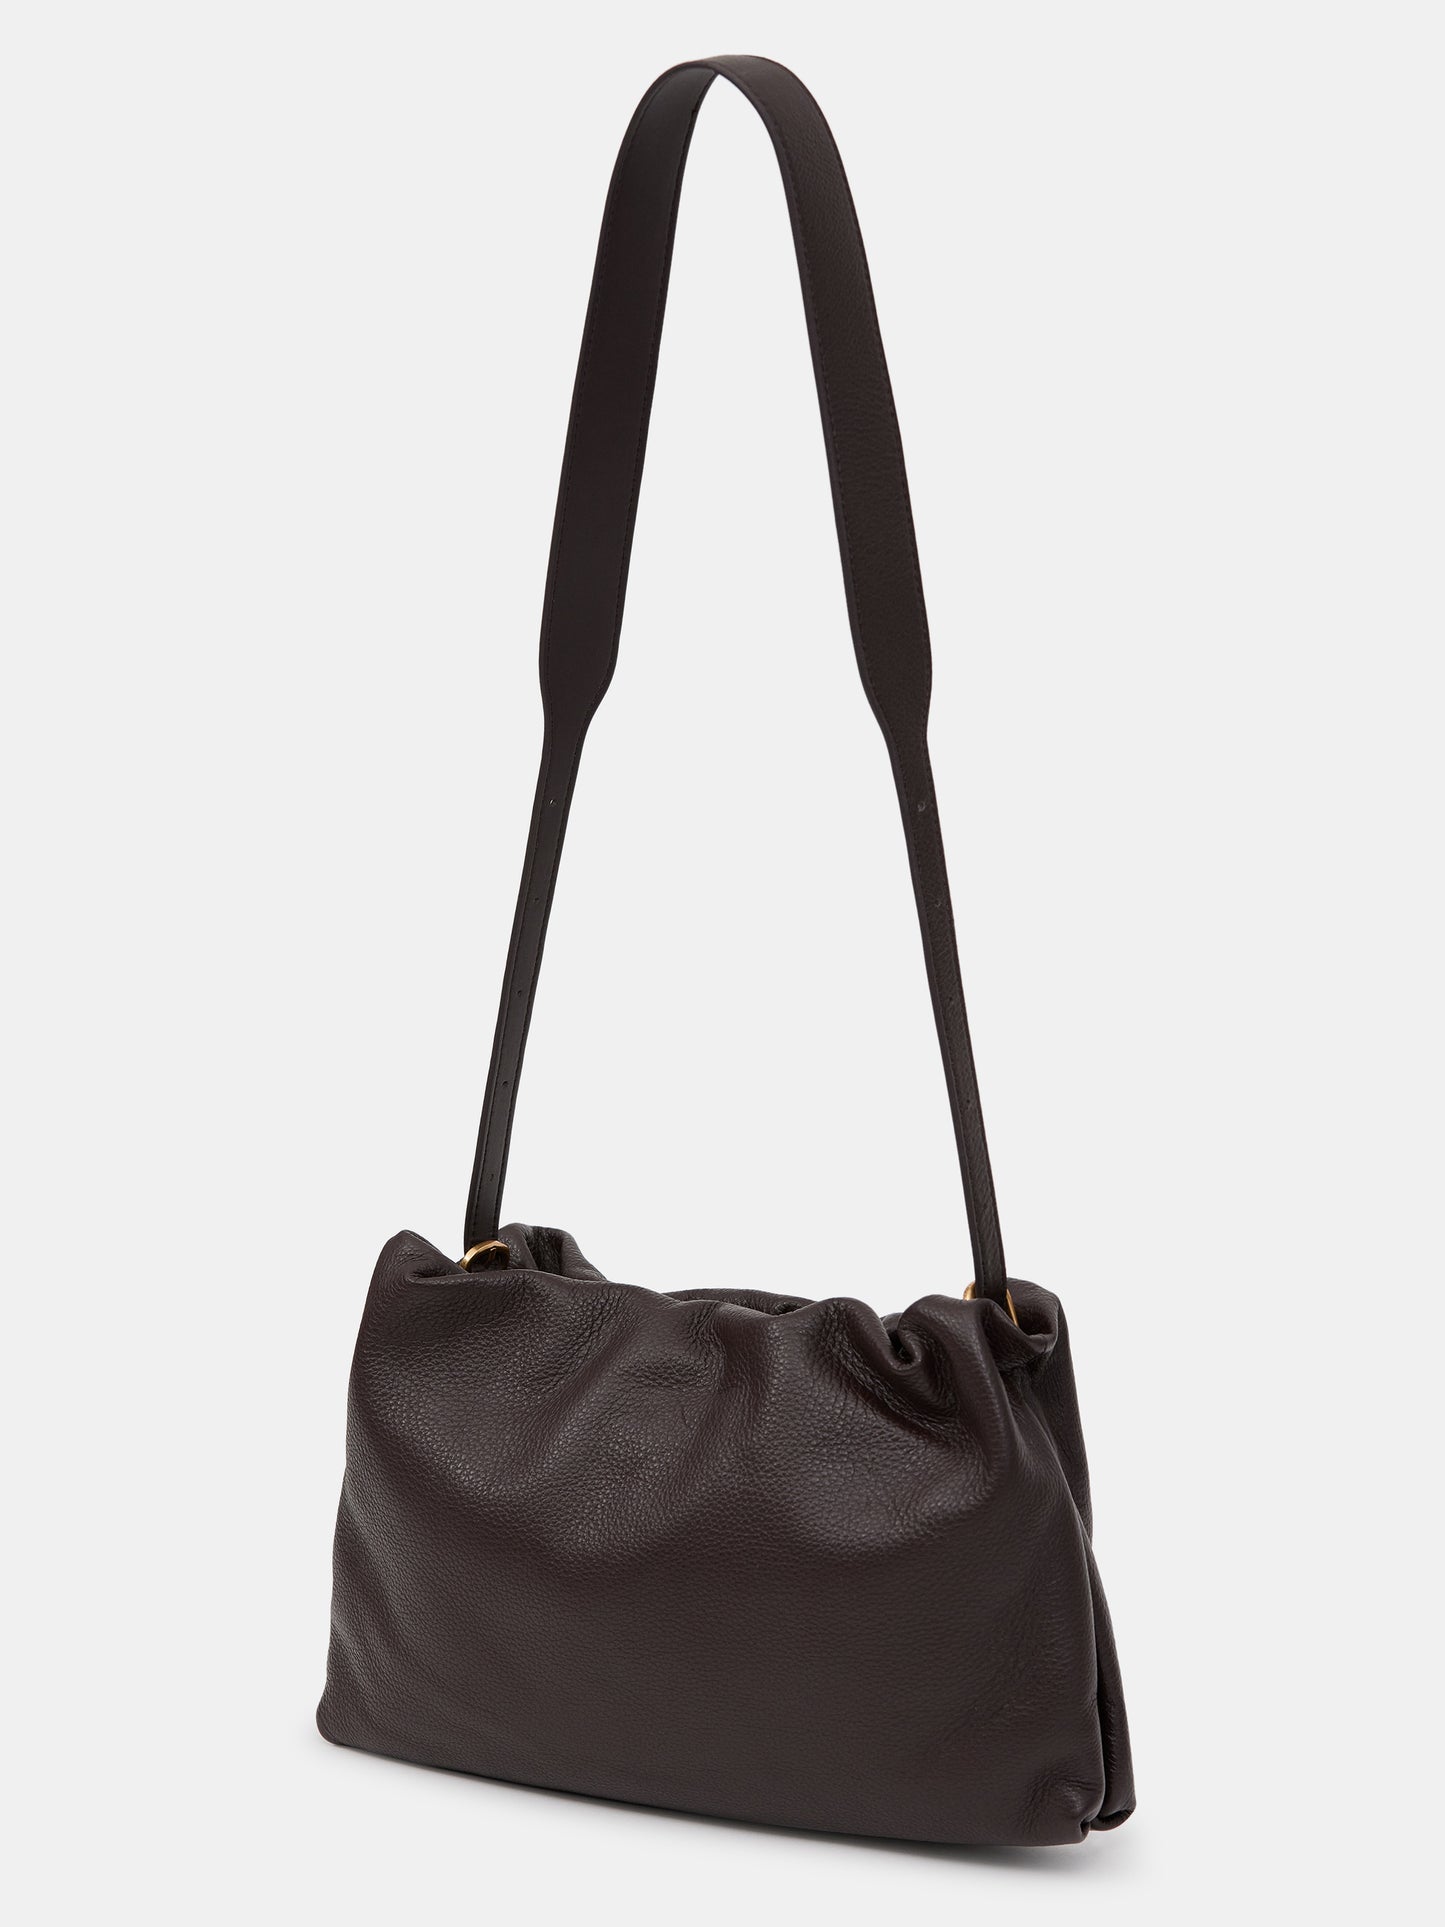 Origami Leather Bag, Dark Brown